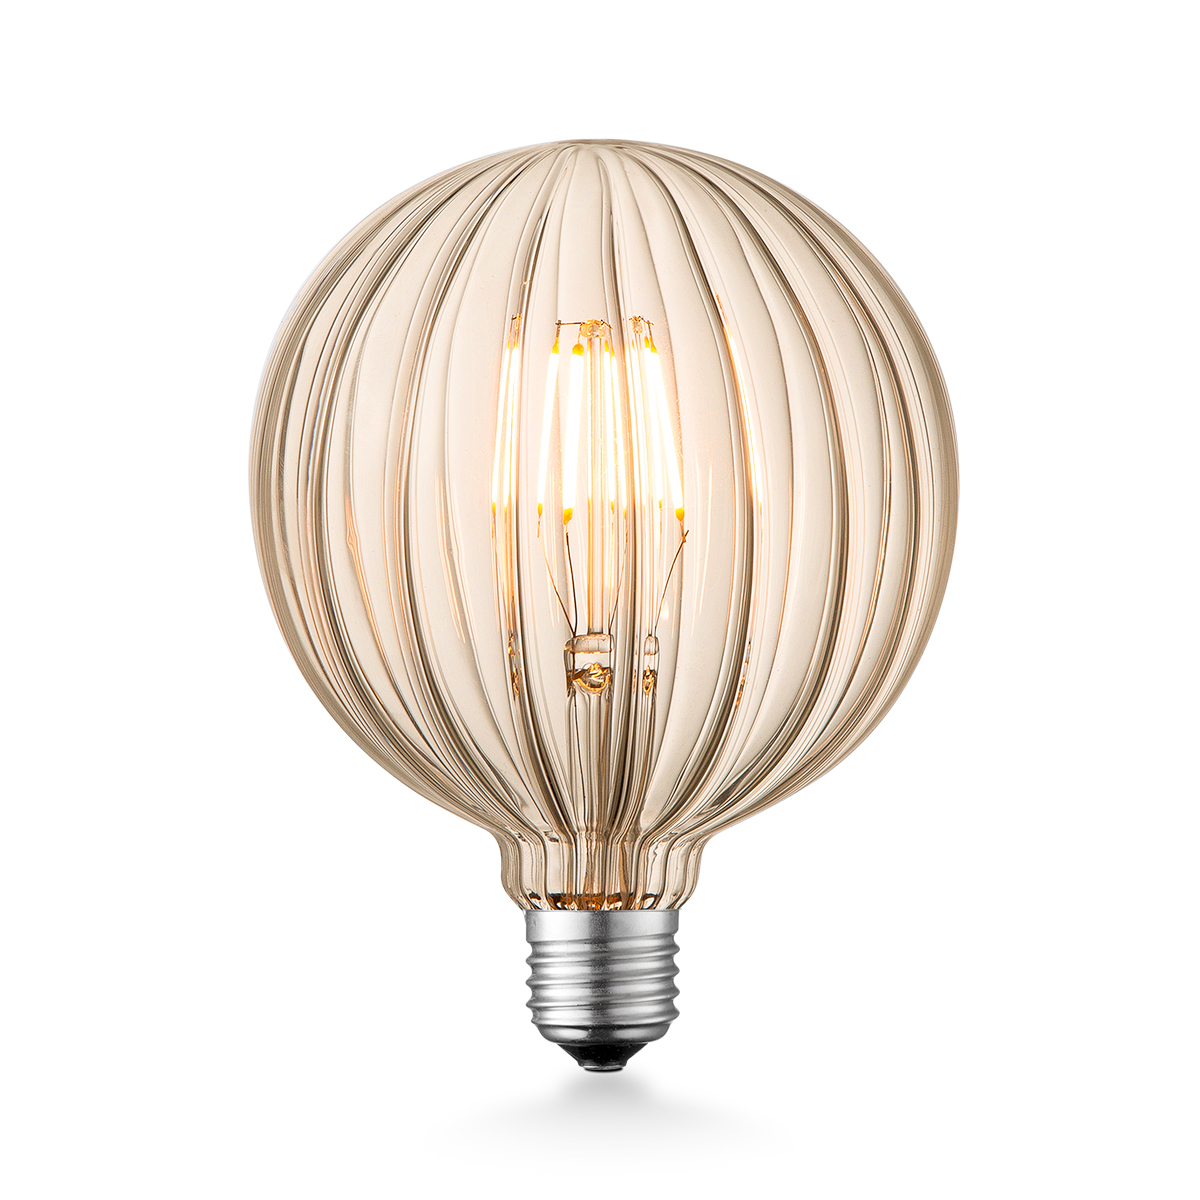 Tangla lighting - TLB-8074-04AM - LED Light Bulb Deco filament - G125 4W amber - dimmable - E27